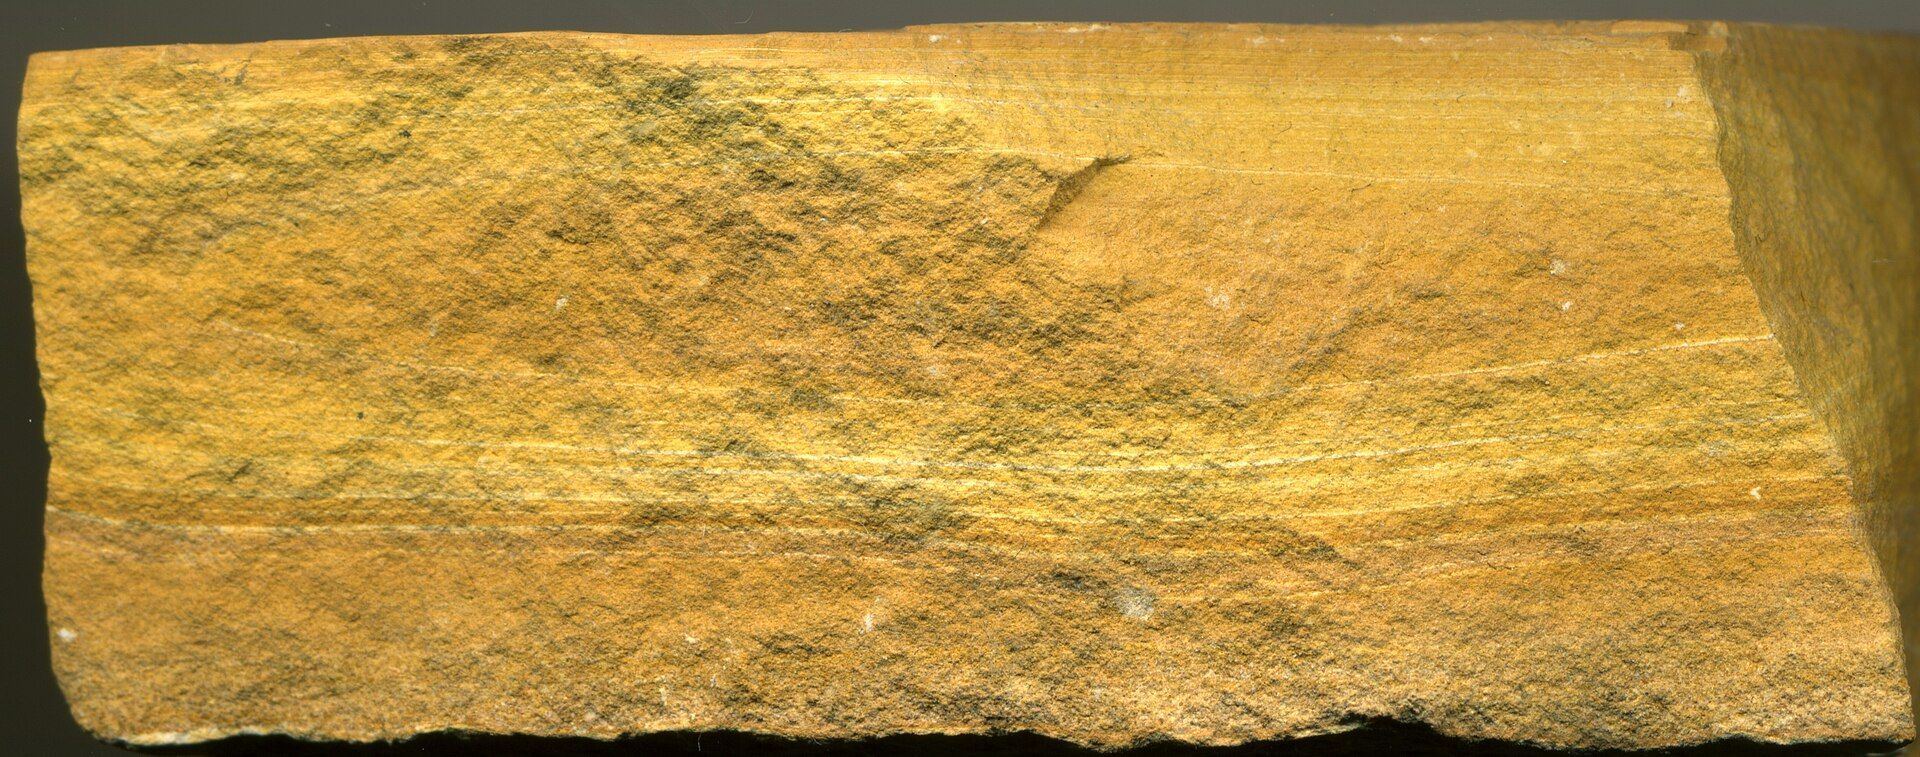 World's Largest Bentonite Deposits, world record in Wyoming